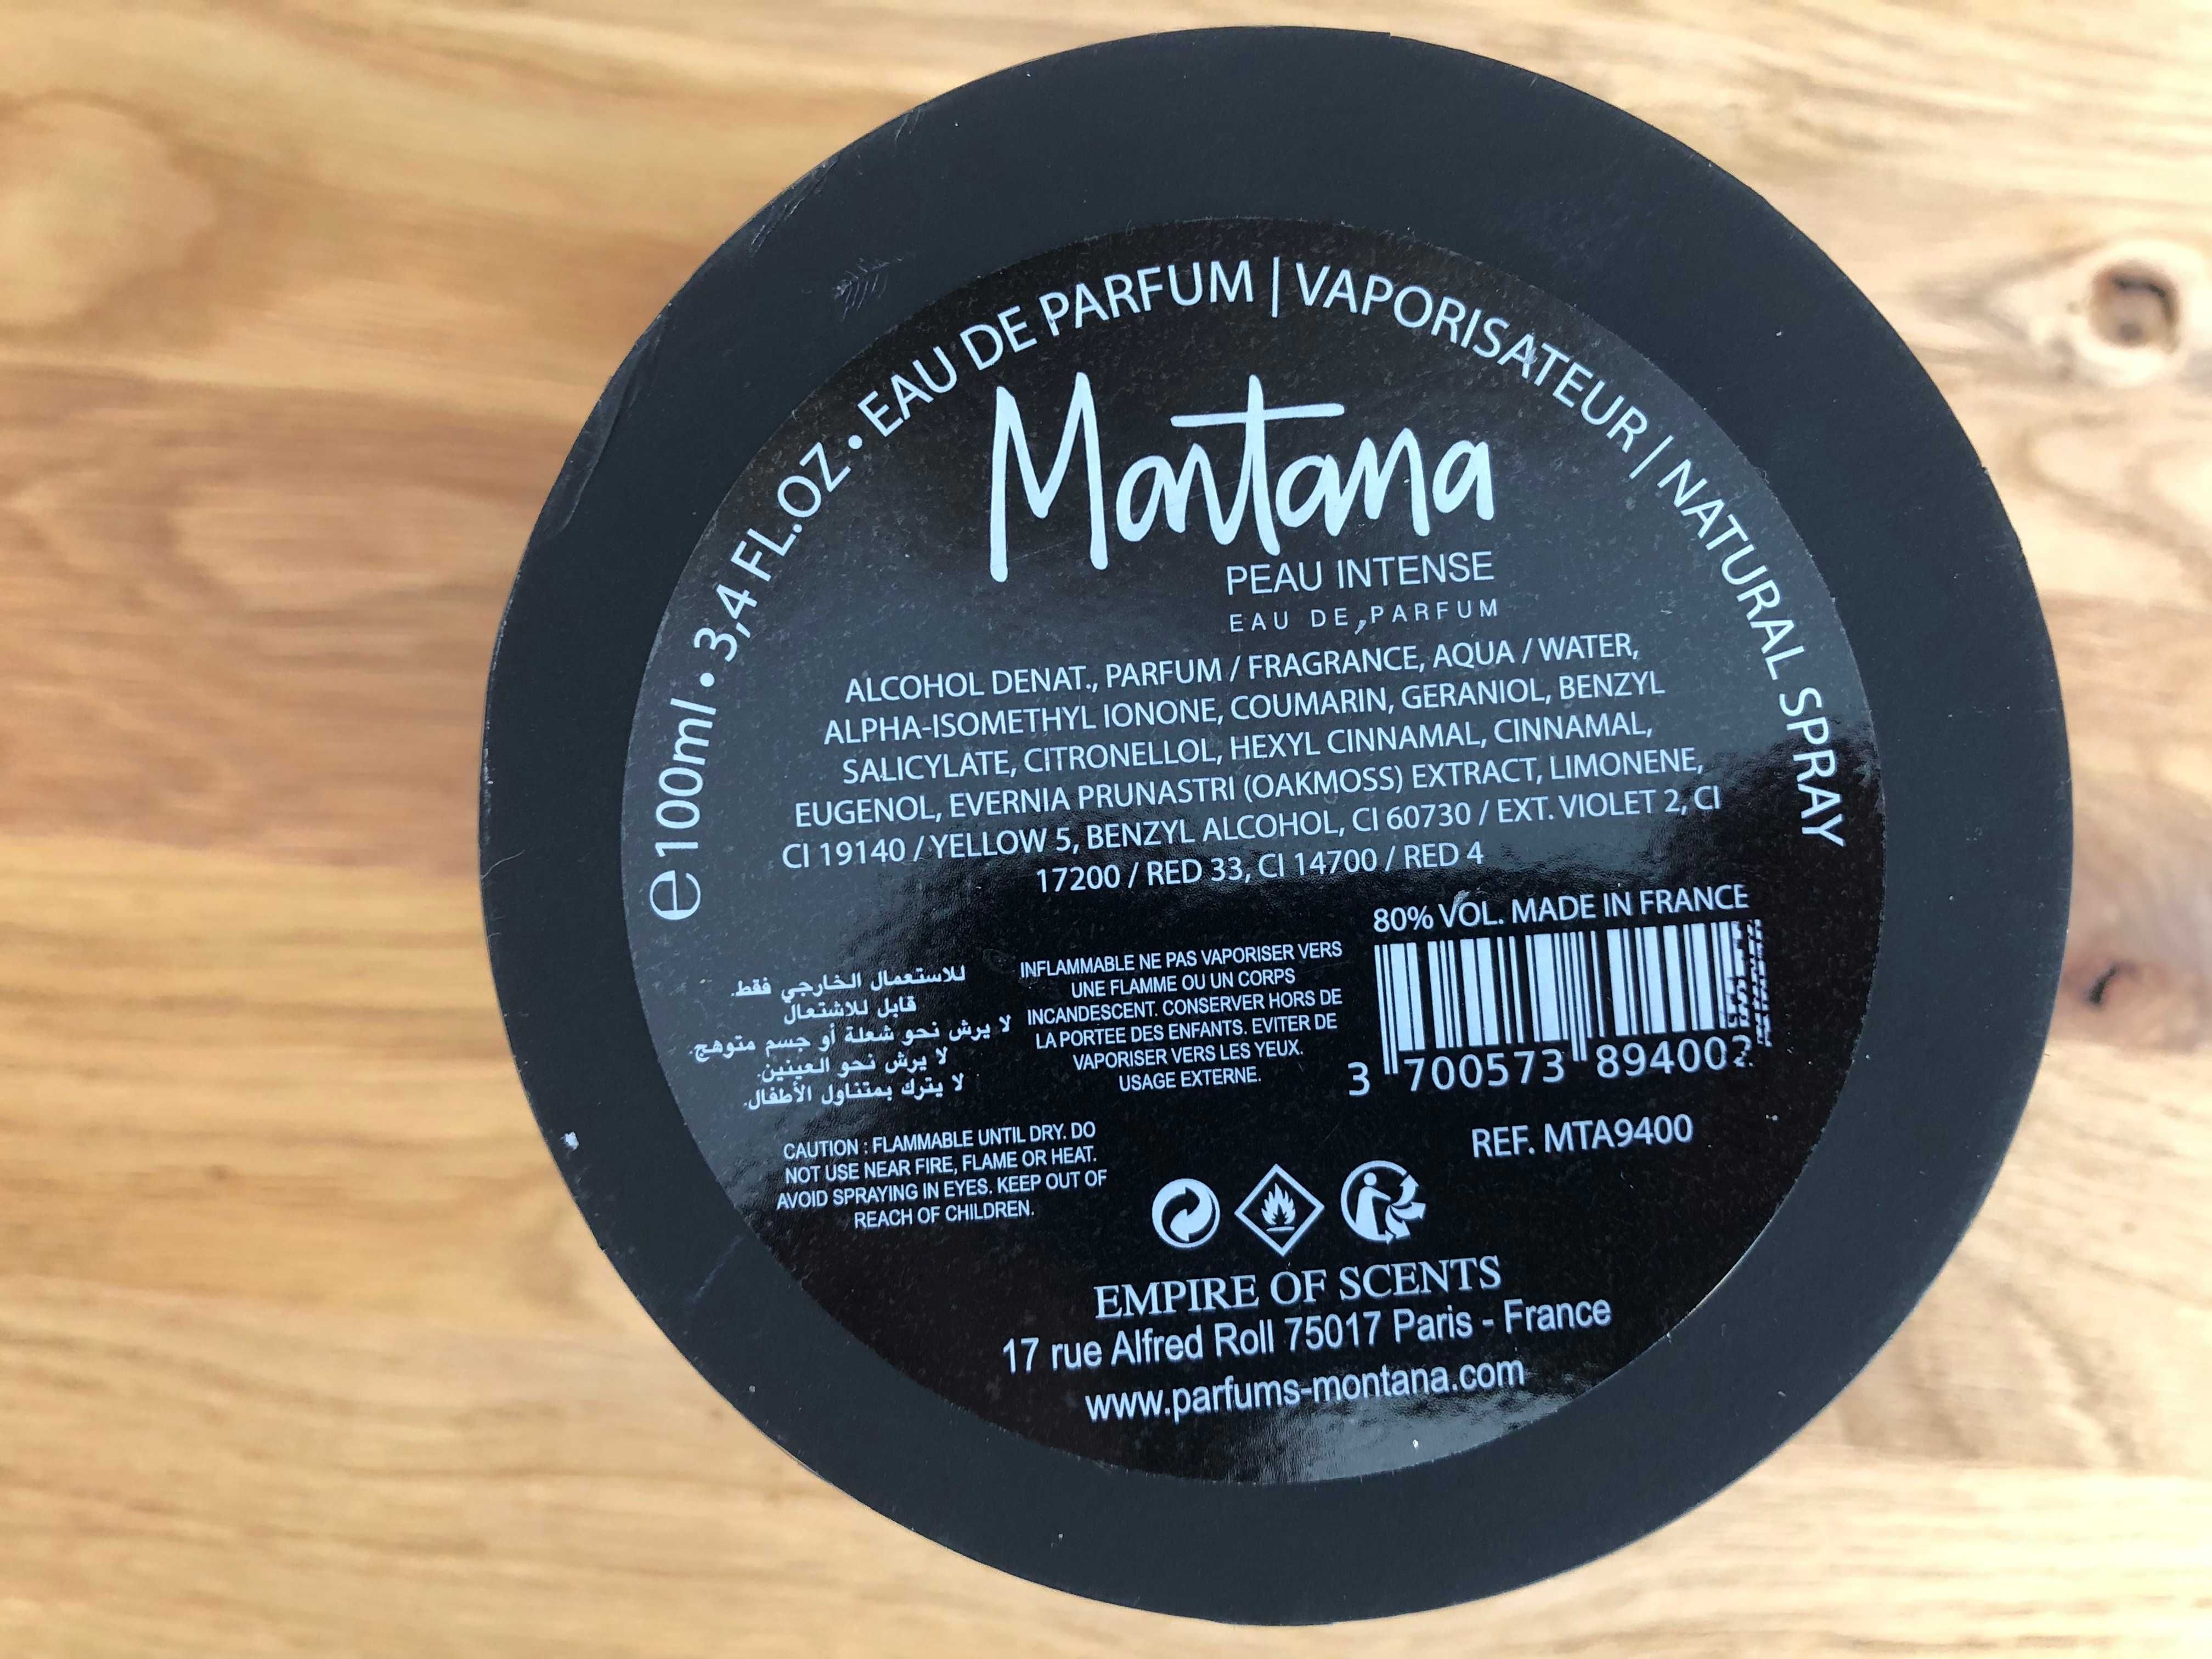 Montana Peau Intense woda perfumowana 100 ml.